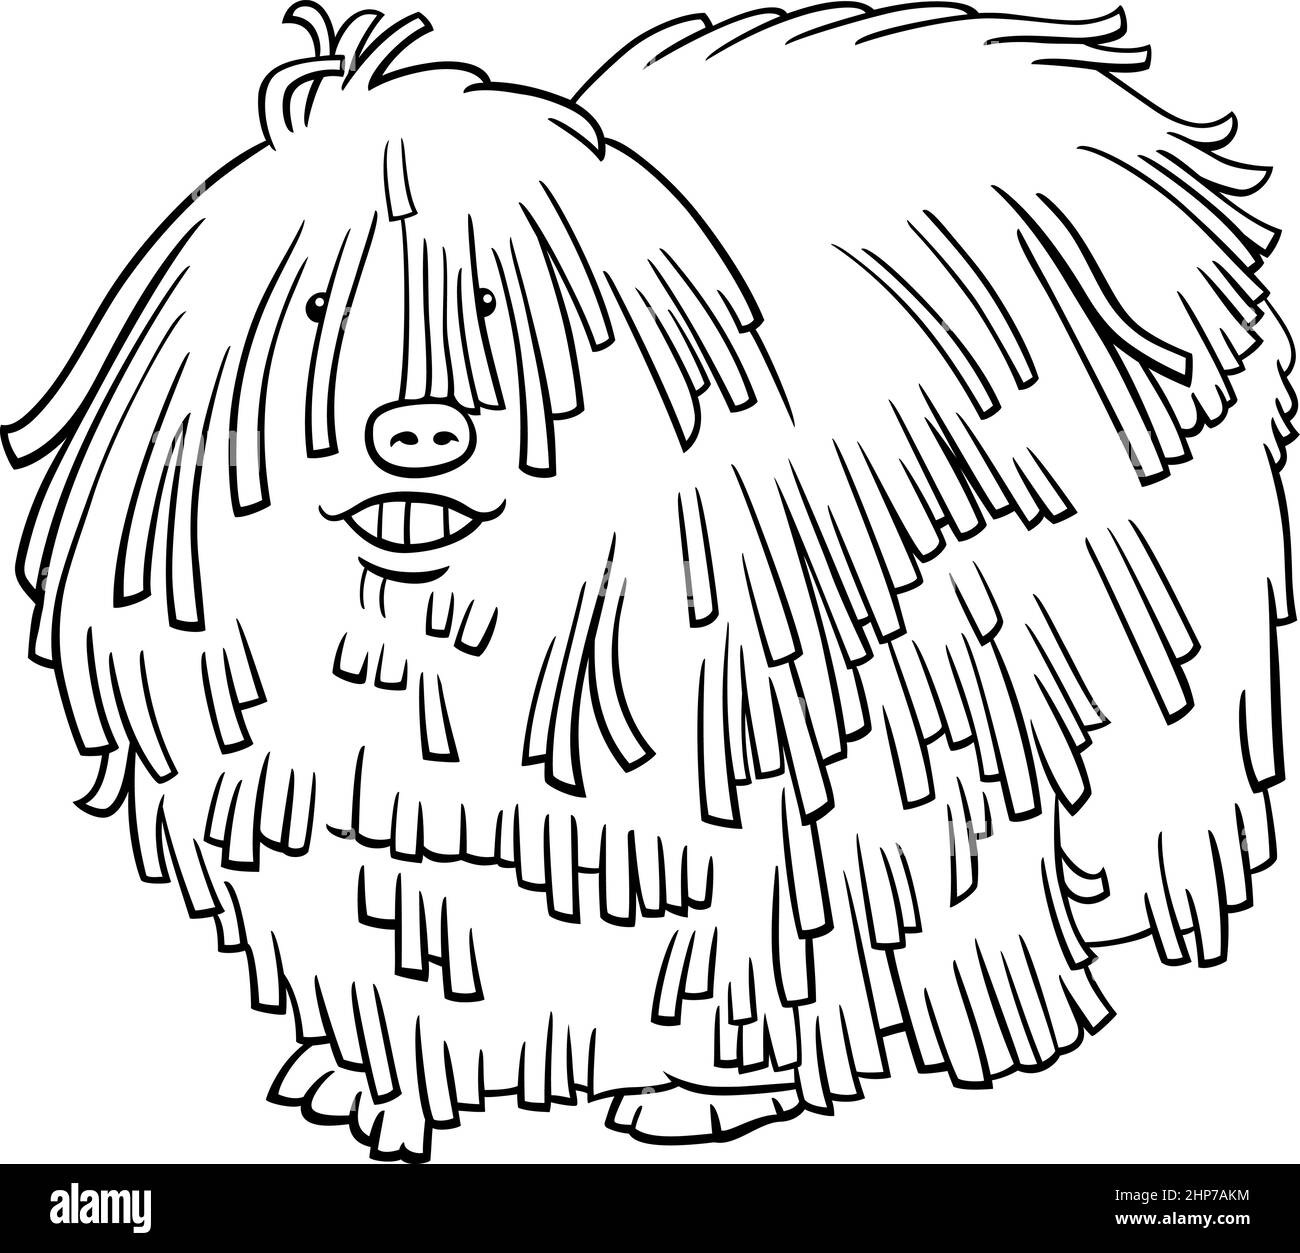 cartoon purebred komondor dog coloring book page Stock Vector